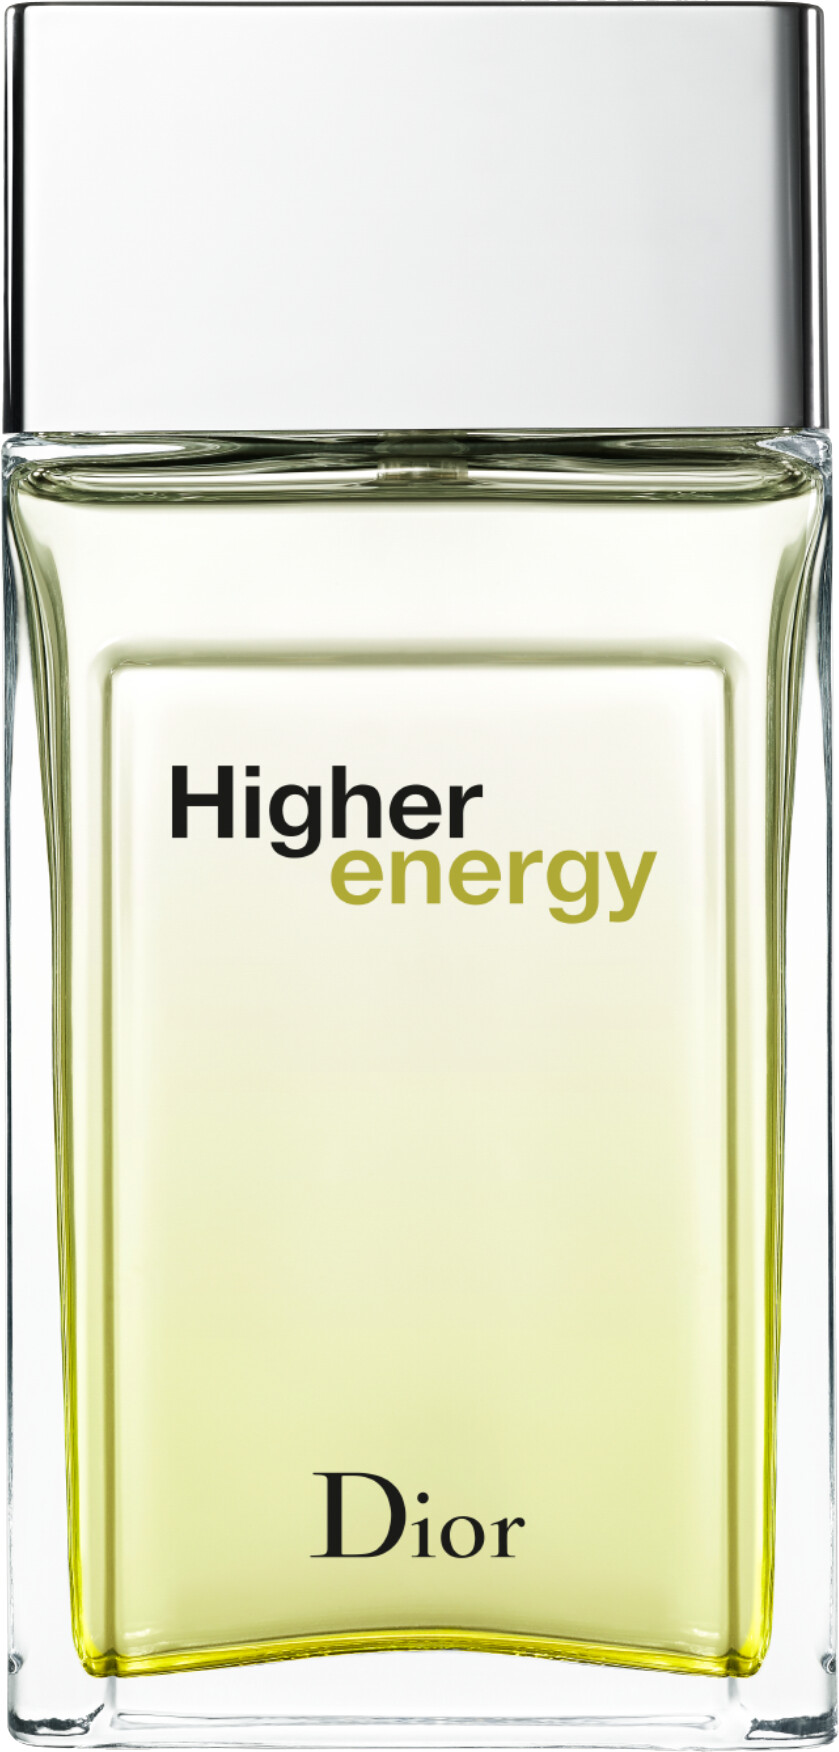 dior higher energy price